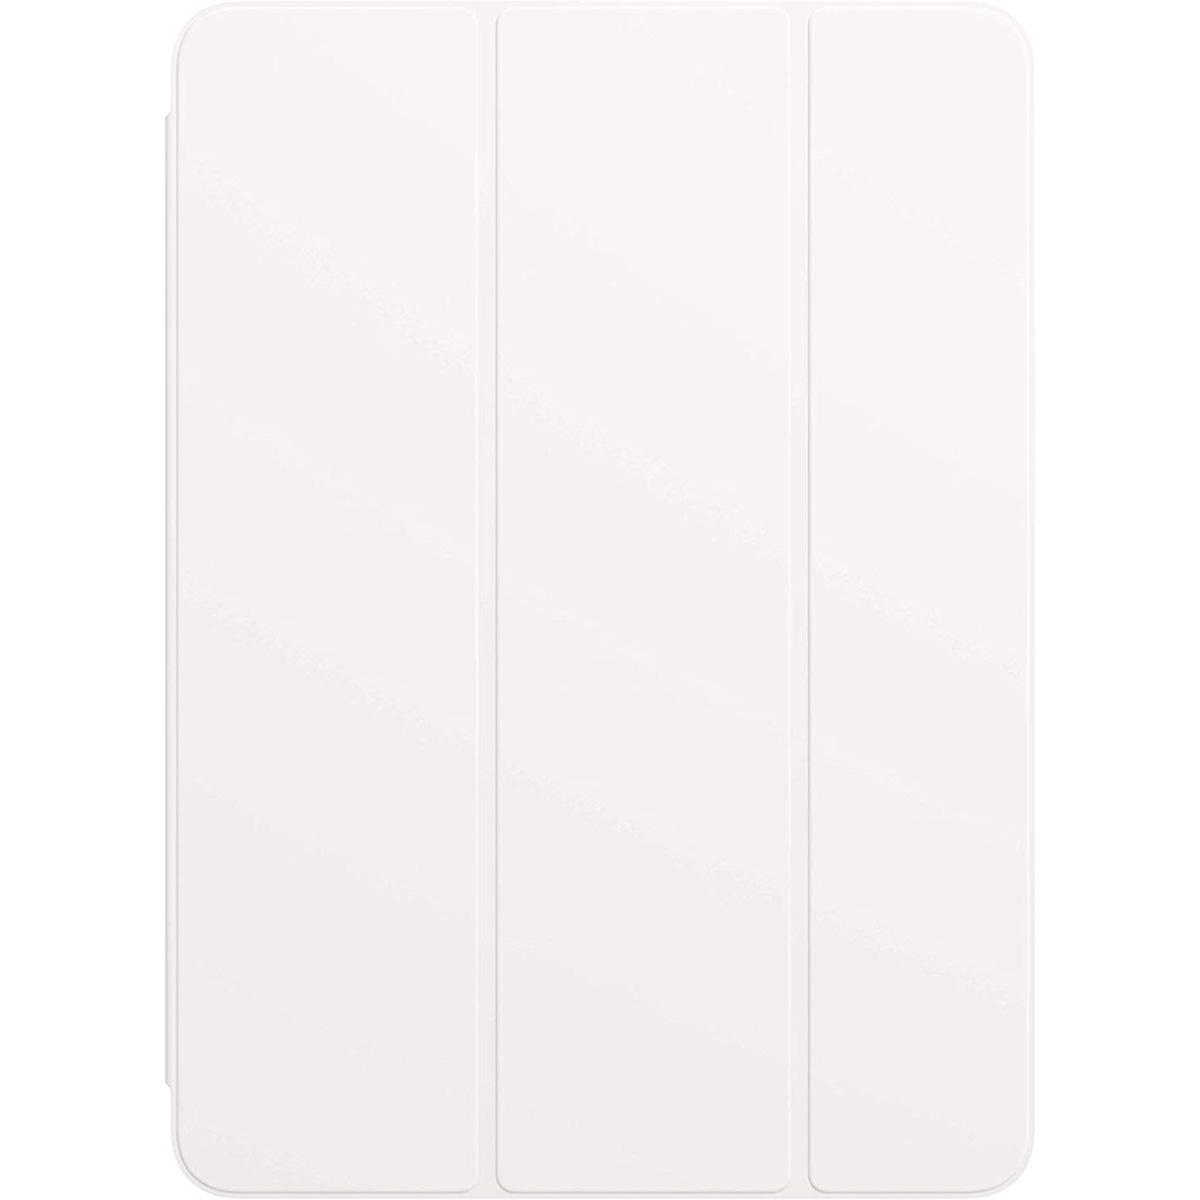 Apple iPad Air 4th Gen Smart Folio for $39 Shipped